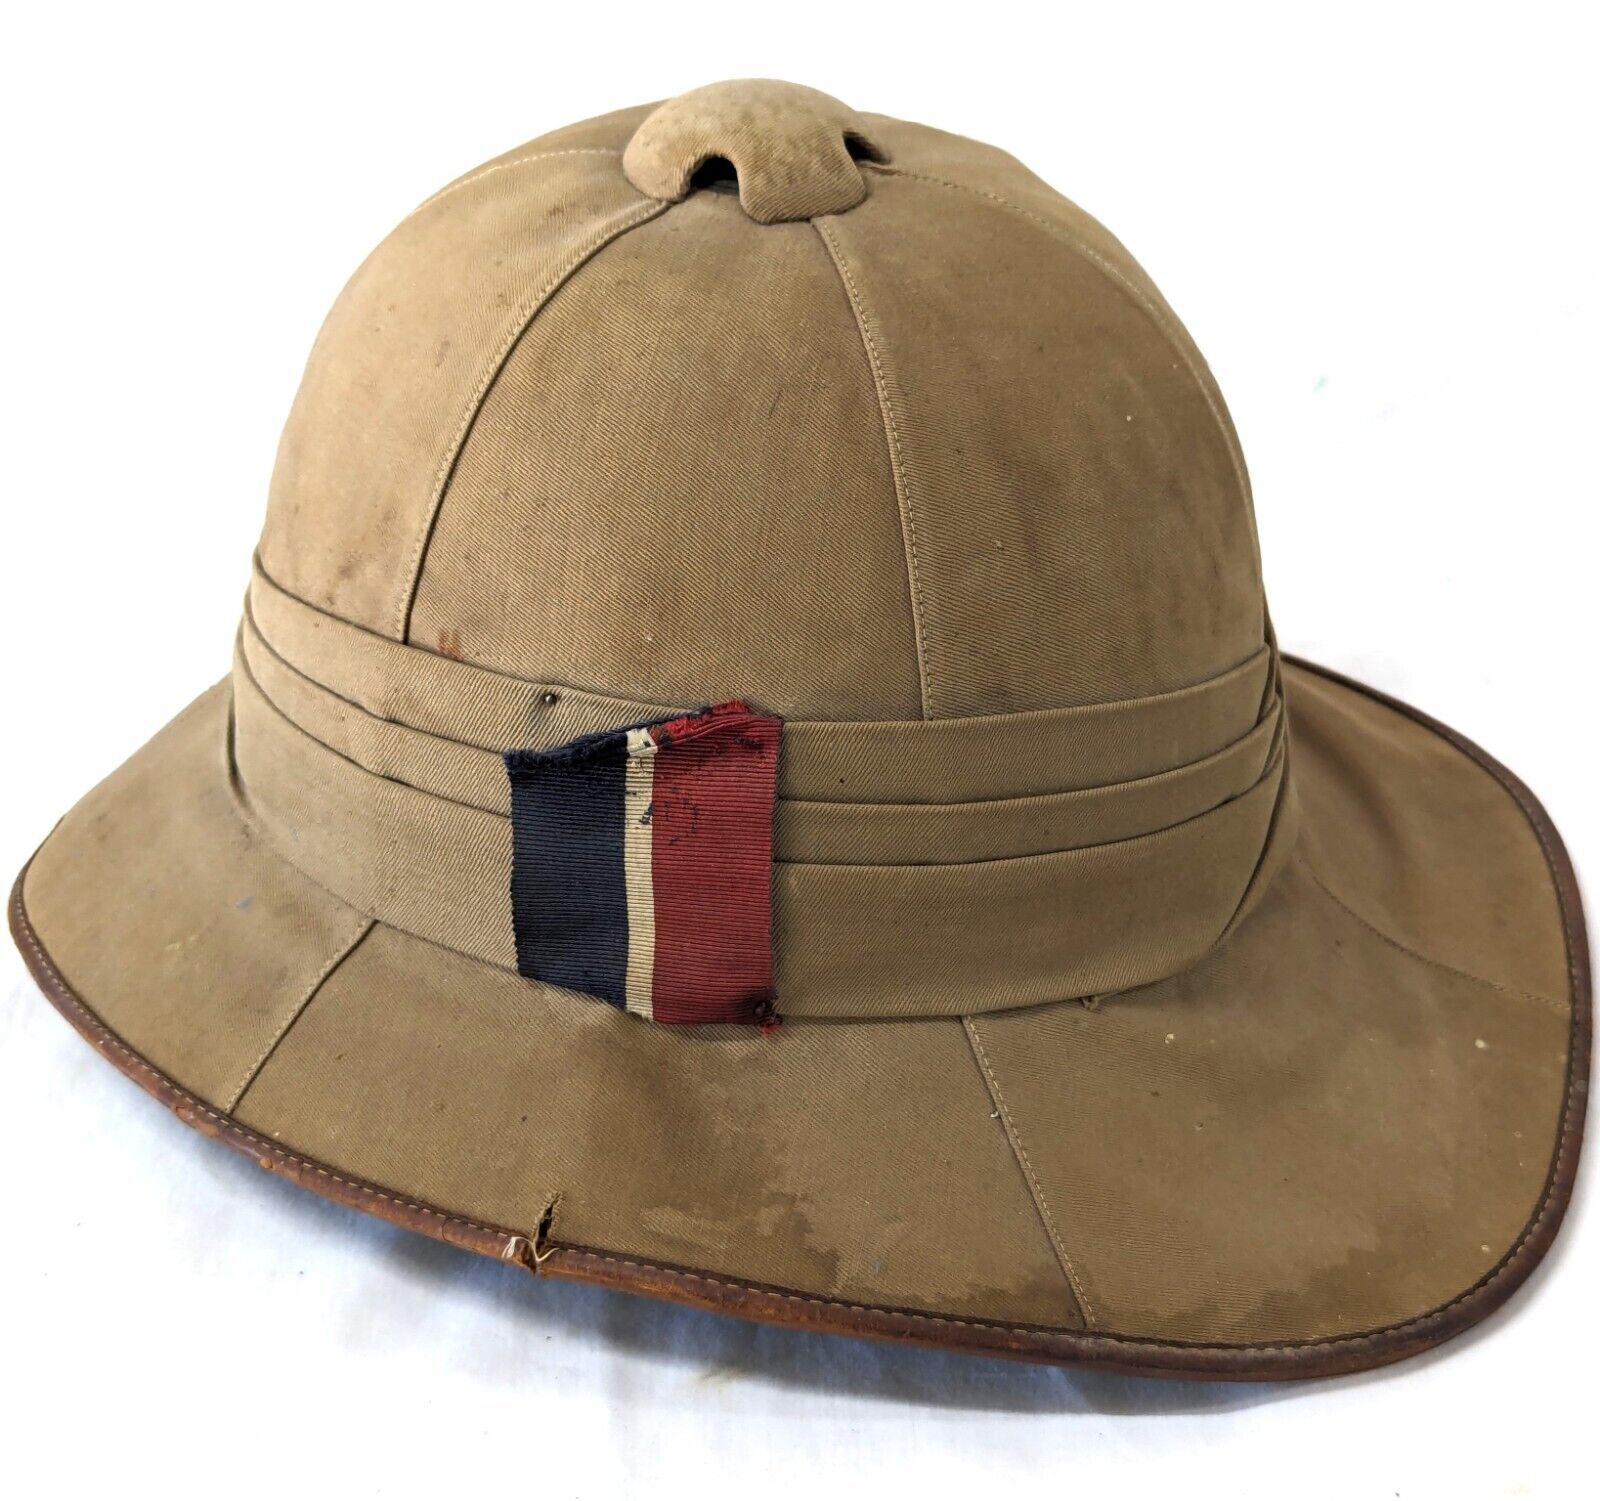 WW1 - WW2 Australian British air force uniform pith helmet - tropical type